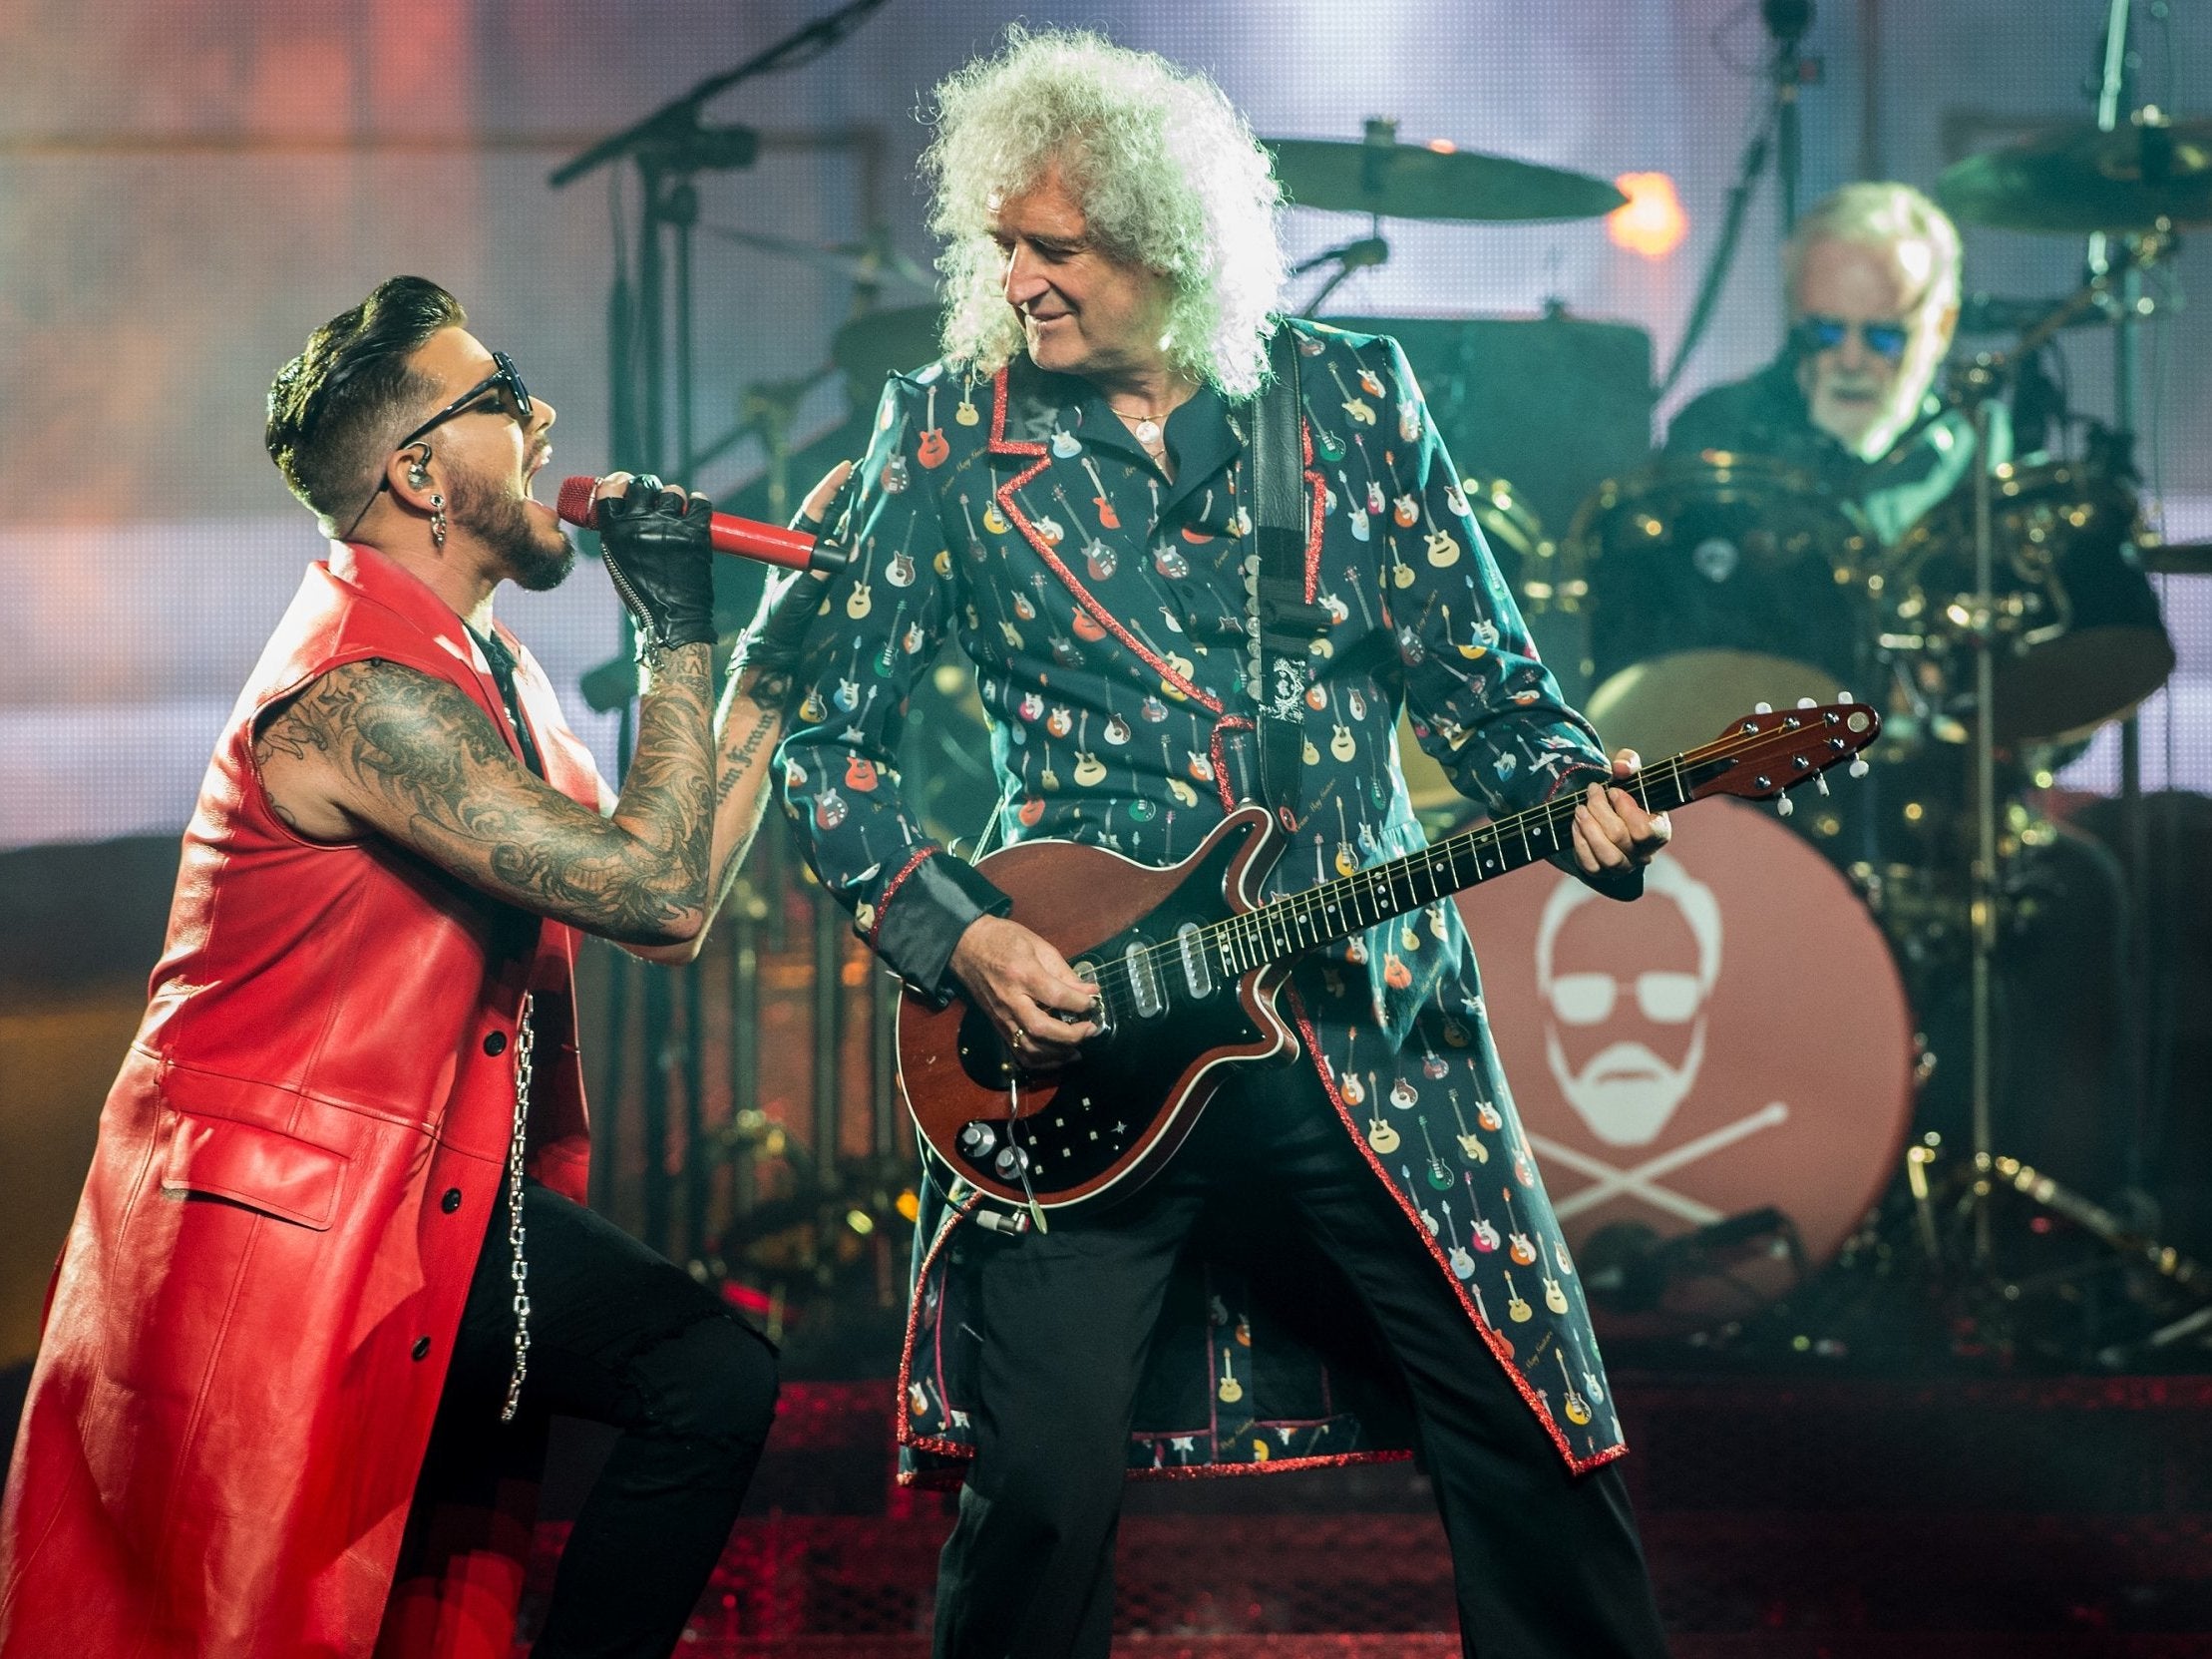 Queen with Adam Lambert, London O2 Arena, review Wonderfully